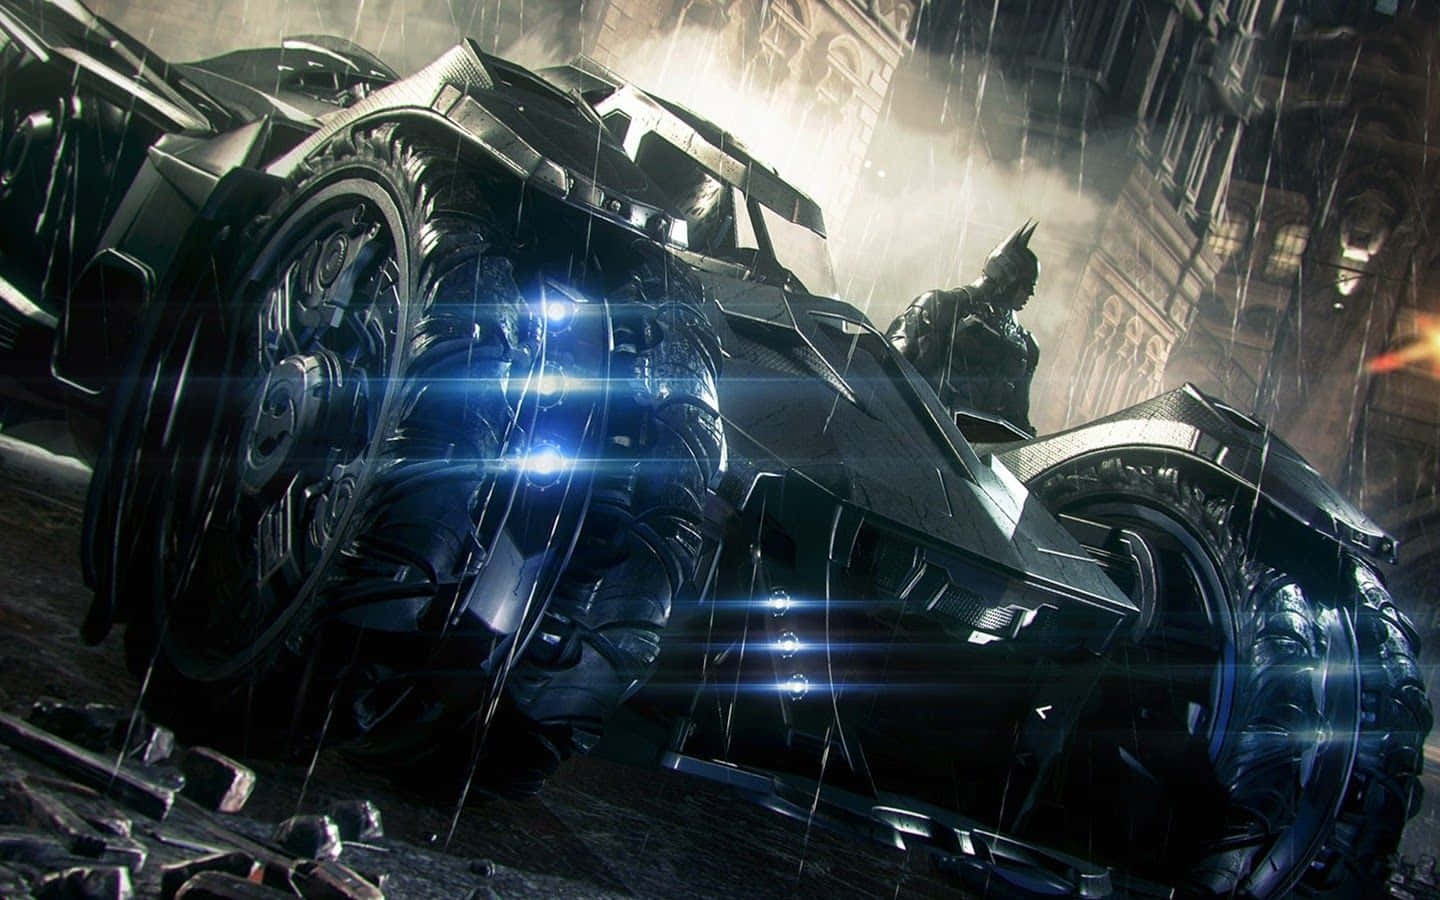 Batman Monster Car Rain Background